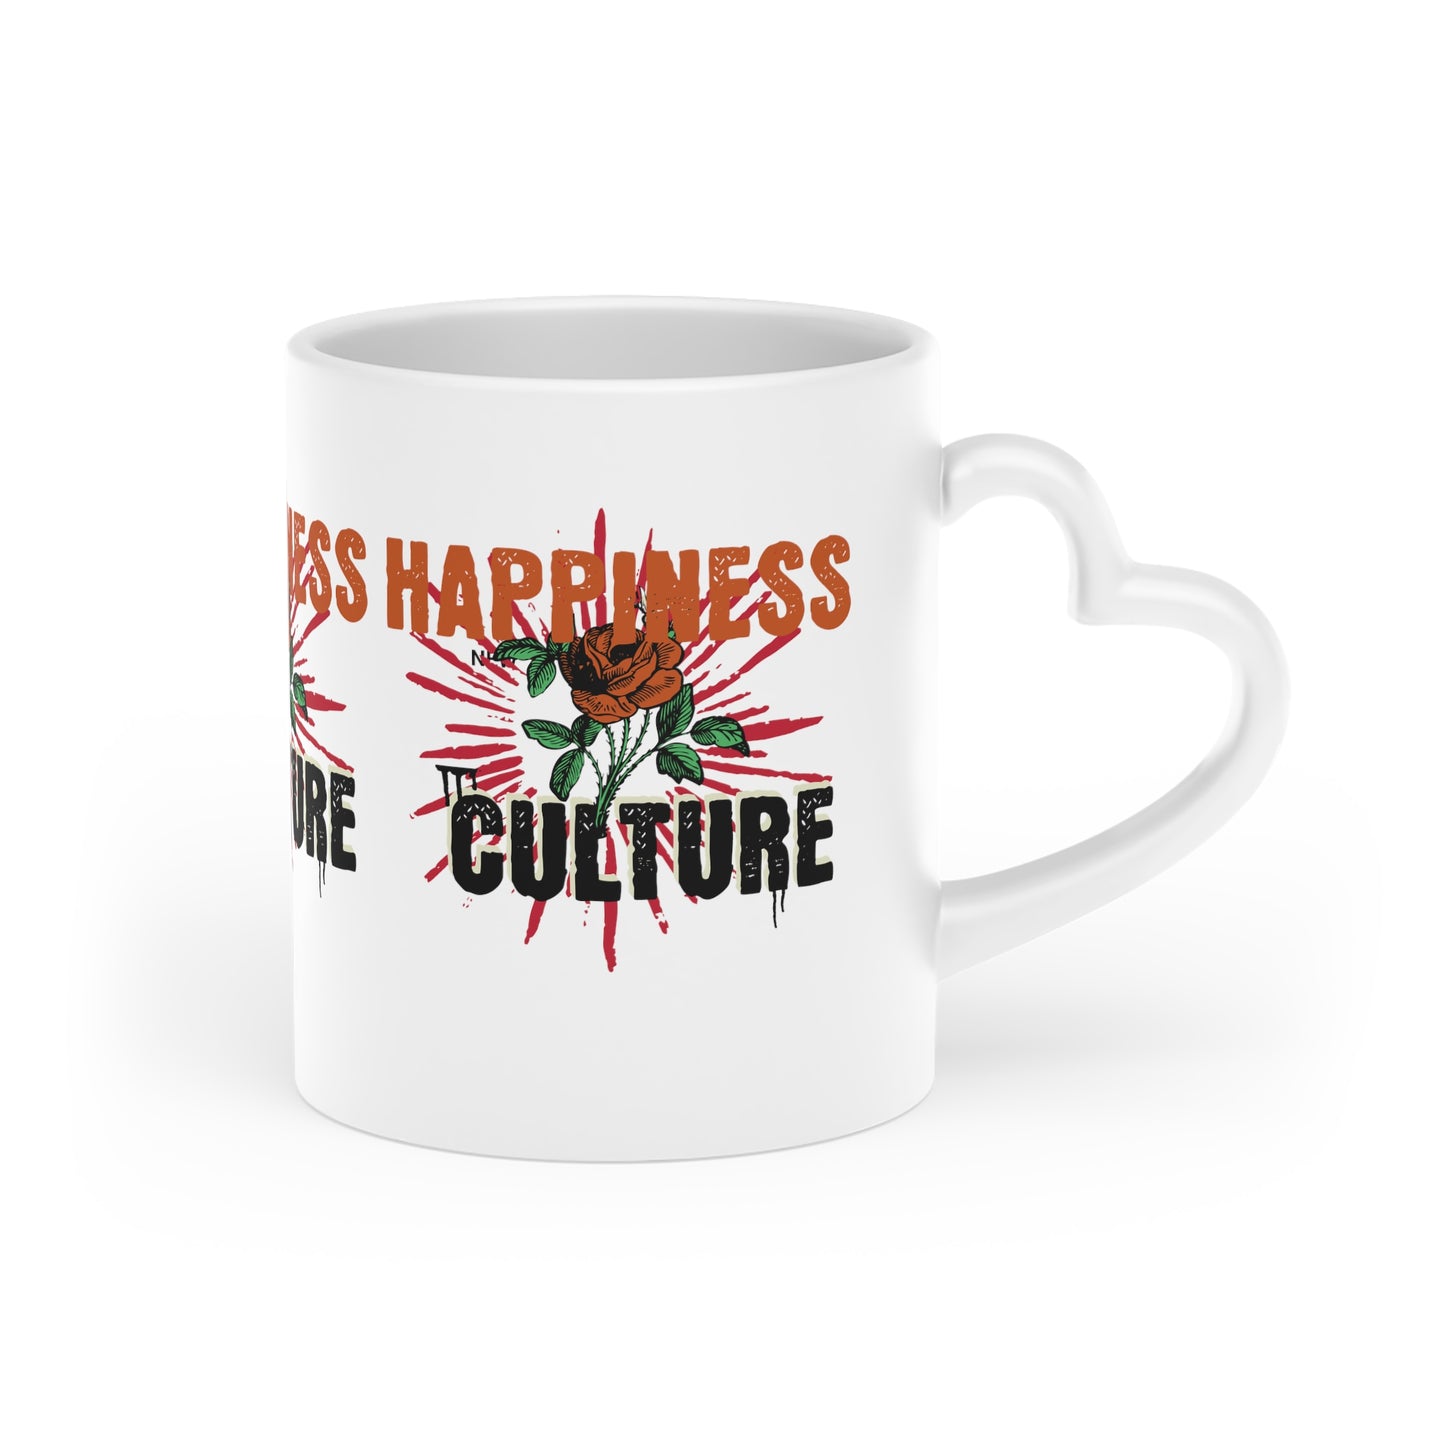 Printed Heart-Shaped Mug, Happiness Culture